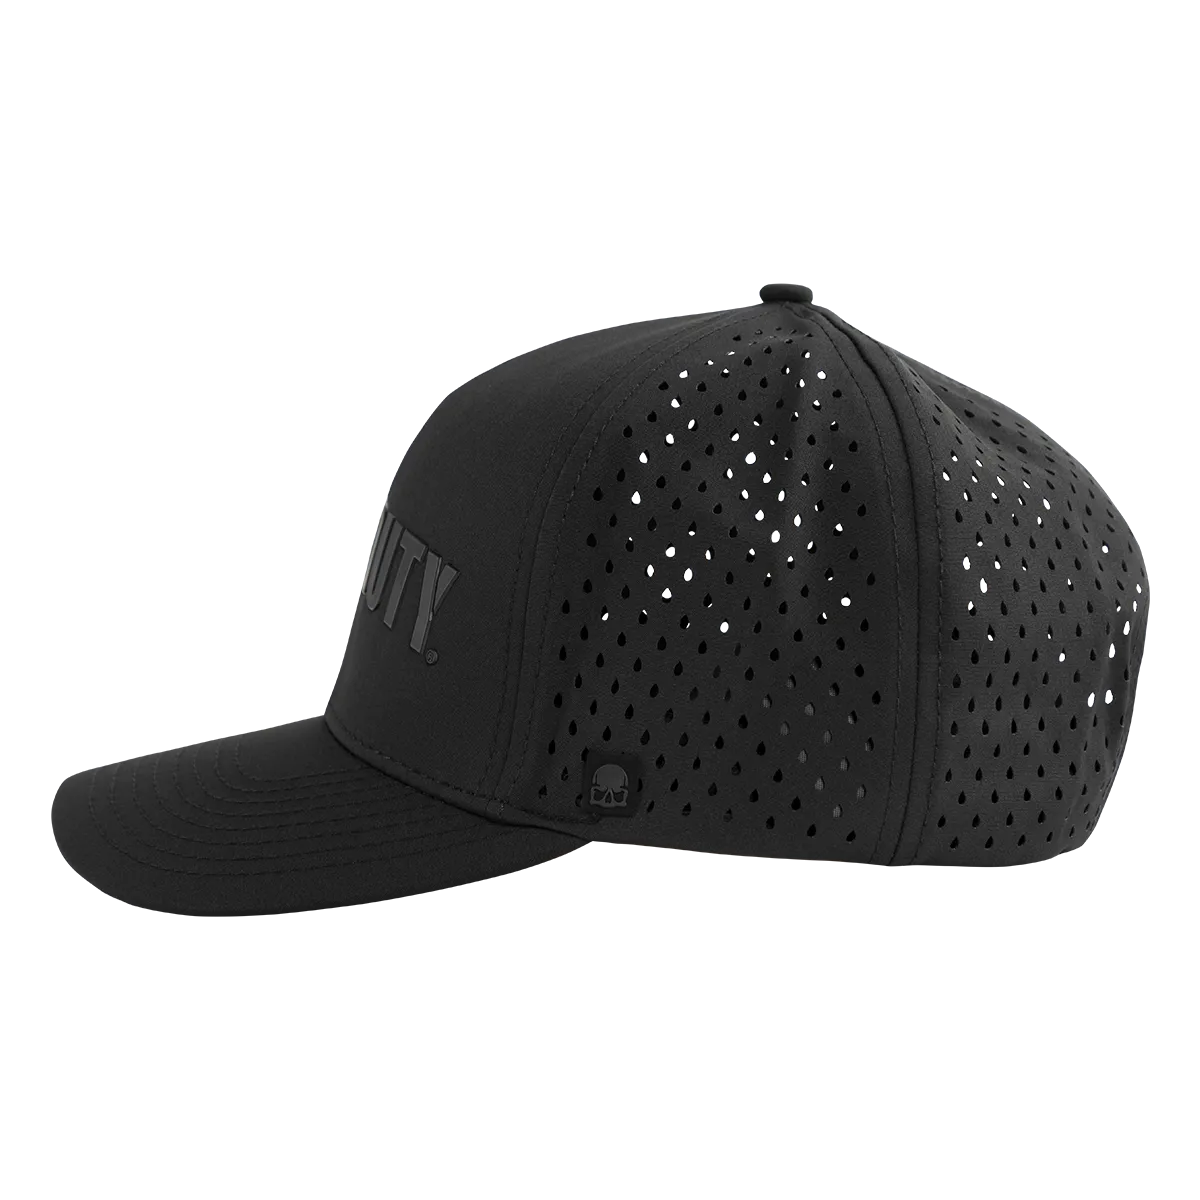 Call of Duty Baseball Cap "Stealth" Black Image 5